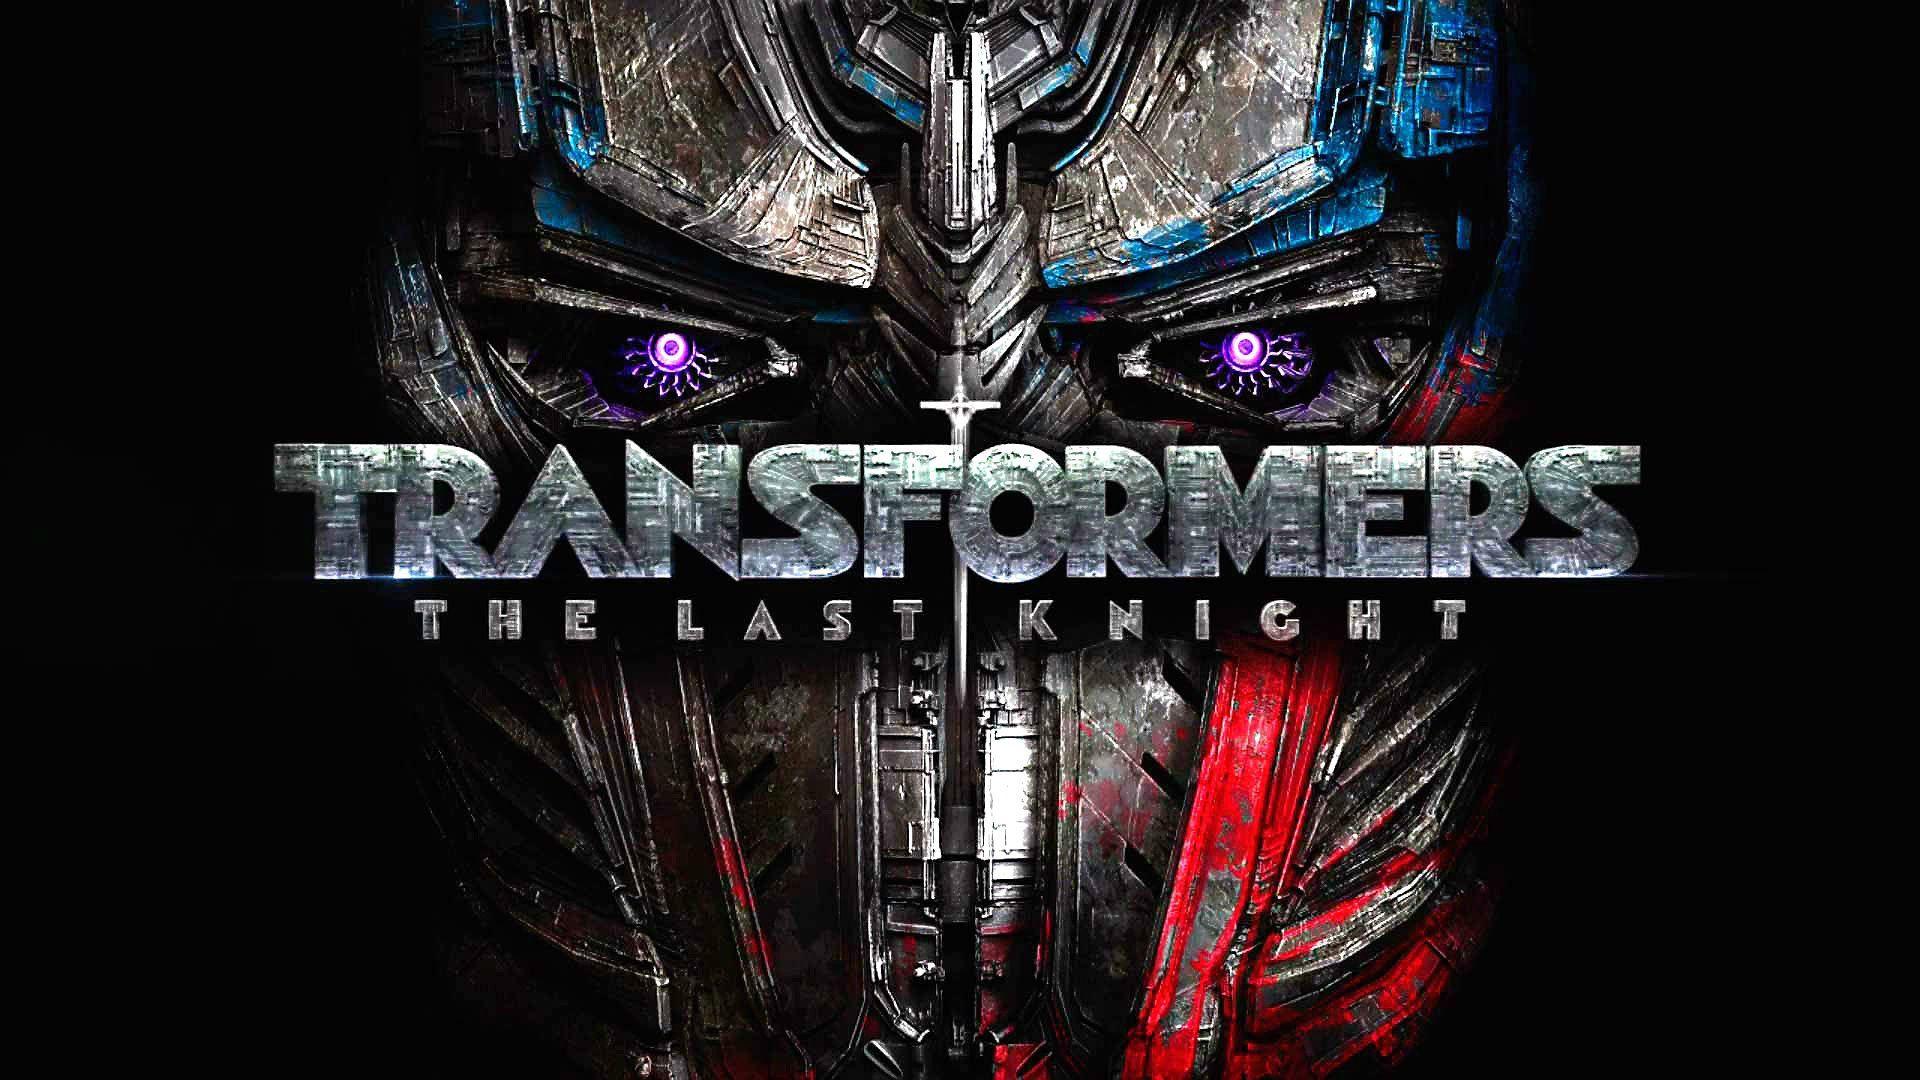 Fondos de pantalla de Transformers - FondosMil